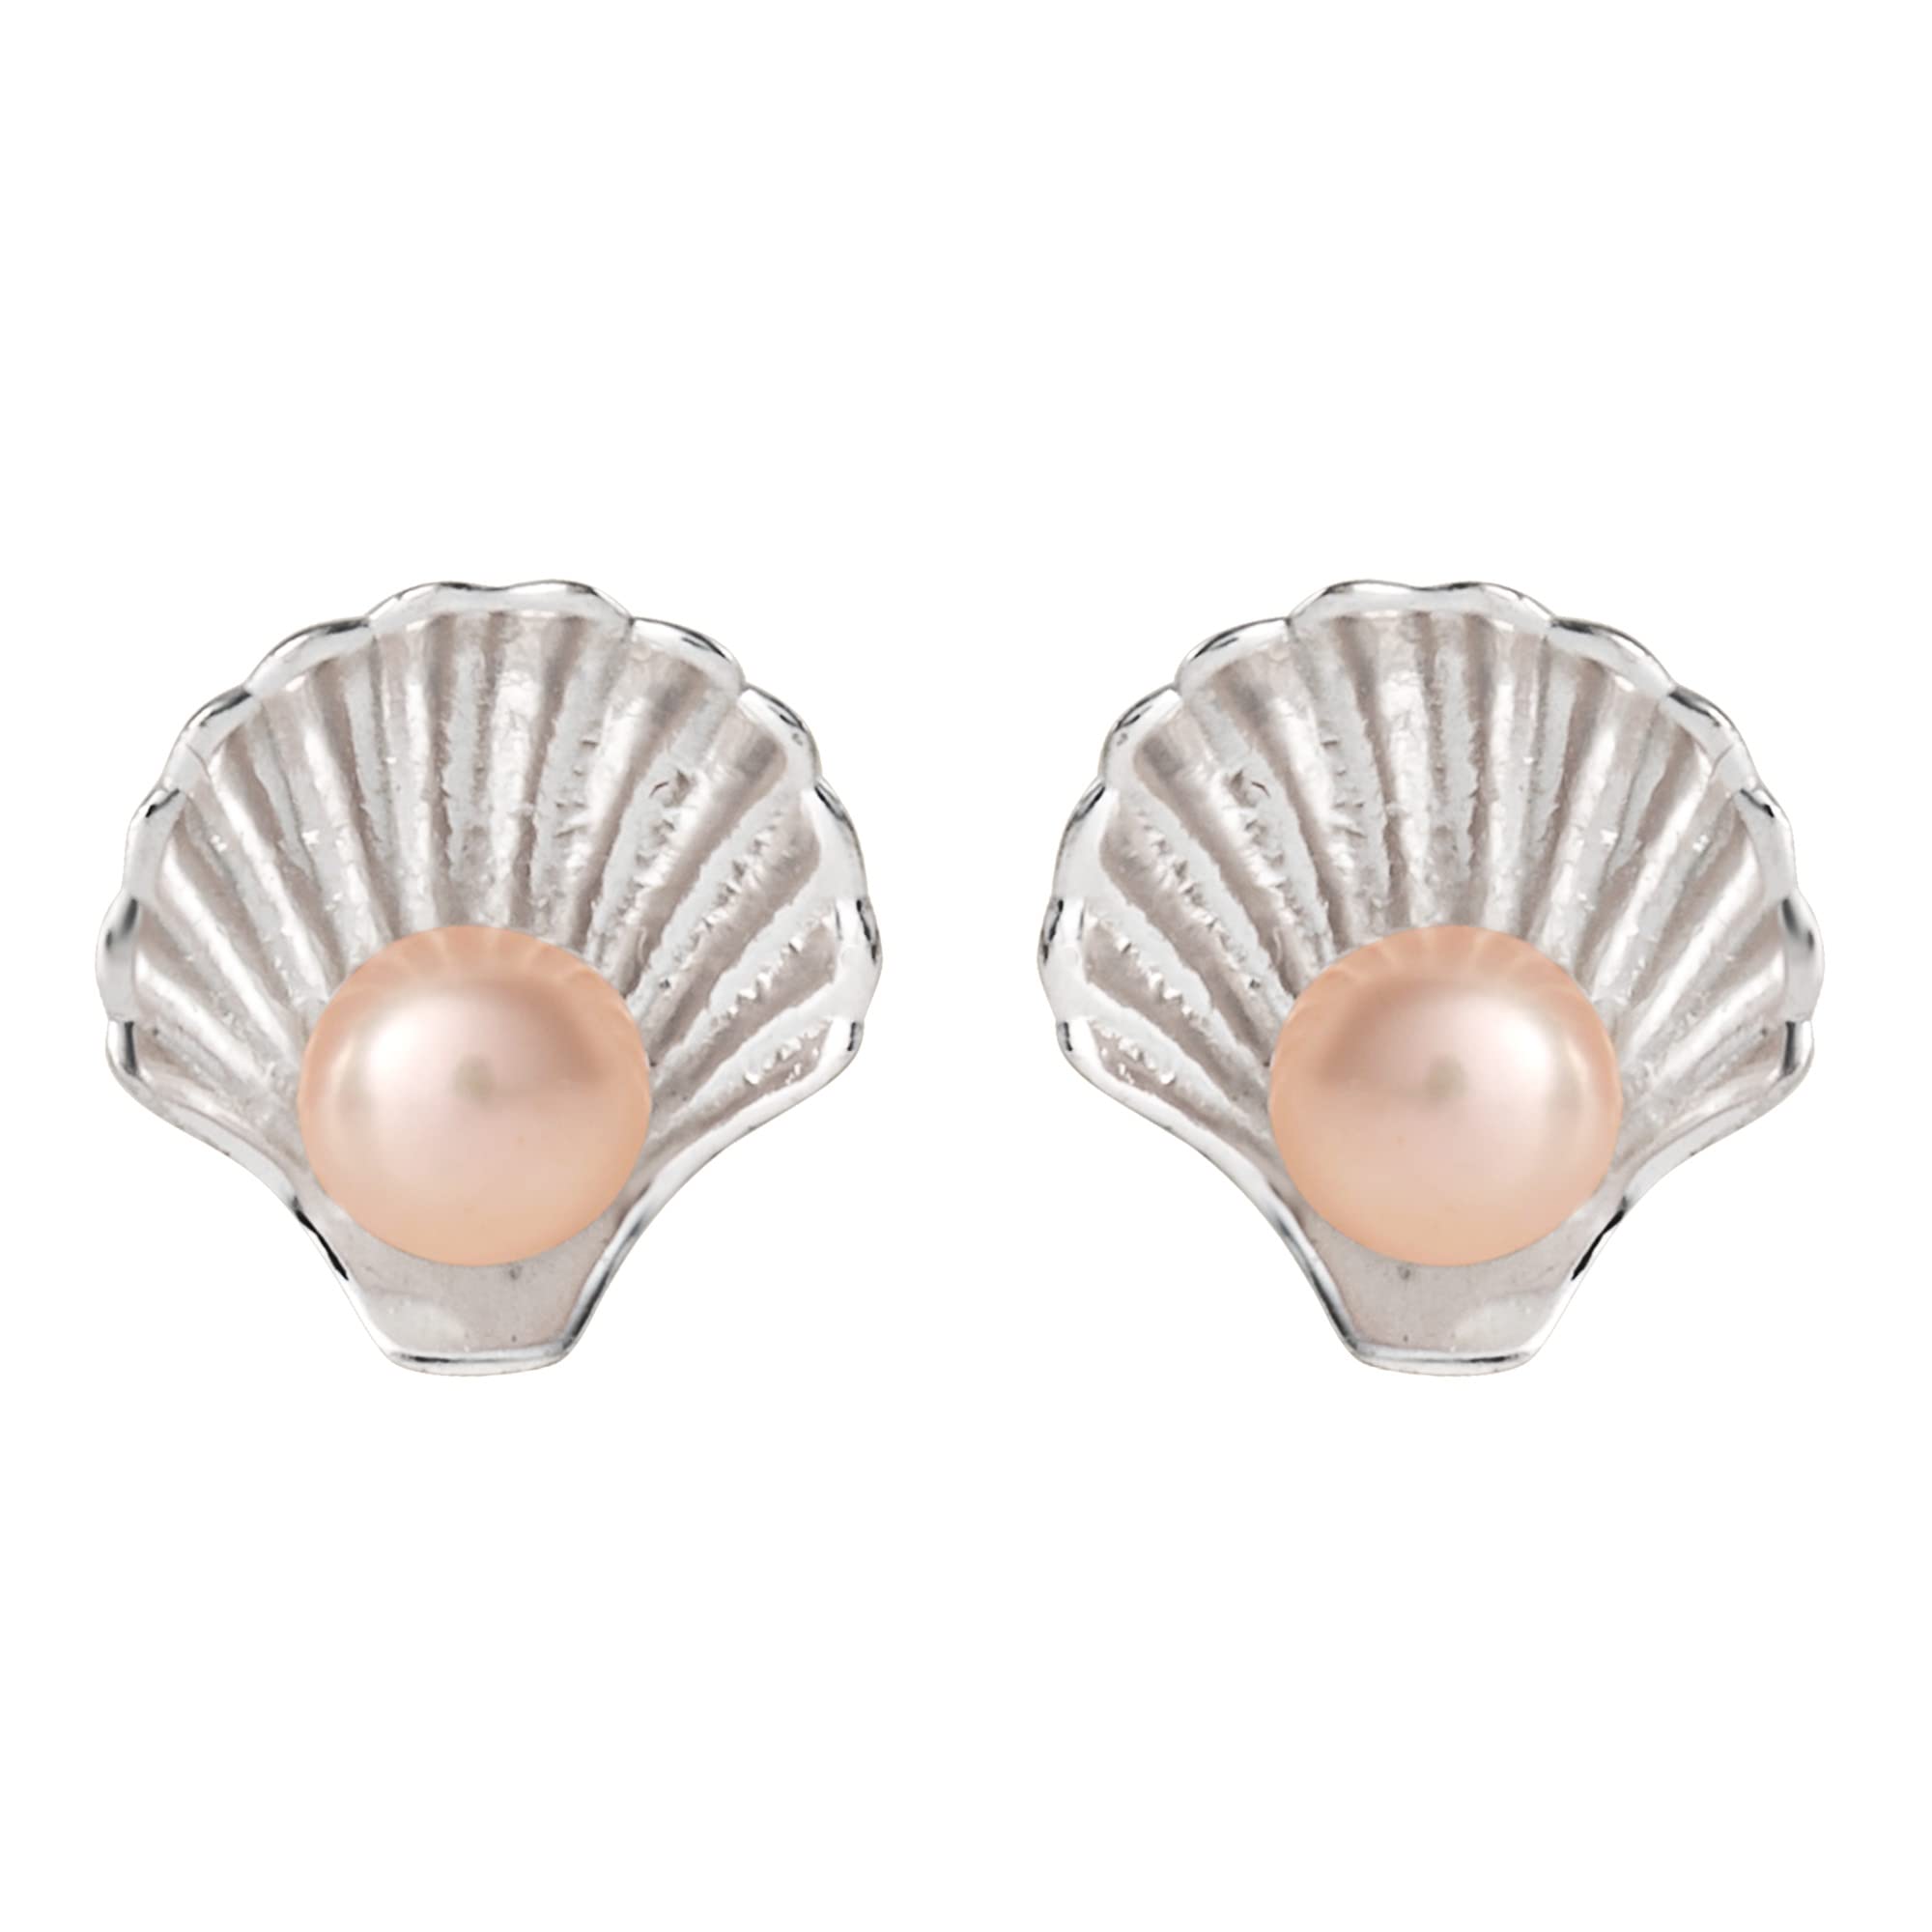 Disney Princess Jewelry, Little Mermaid Seashell Pearl Stud Earrings, Sterling Silver